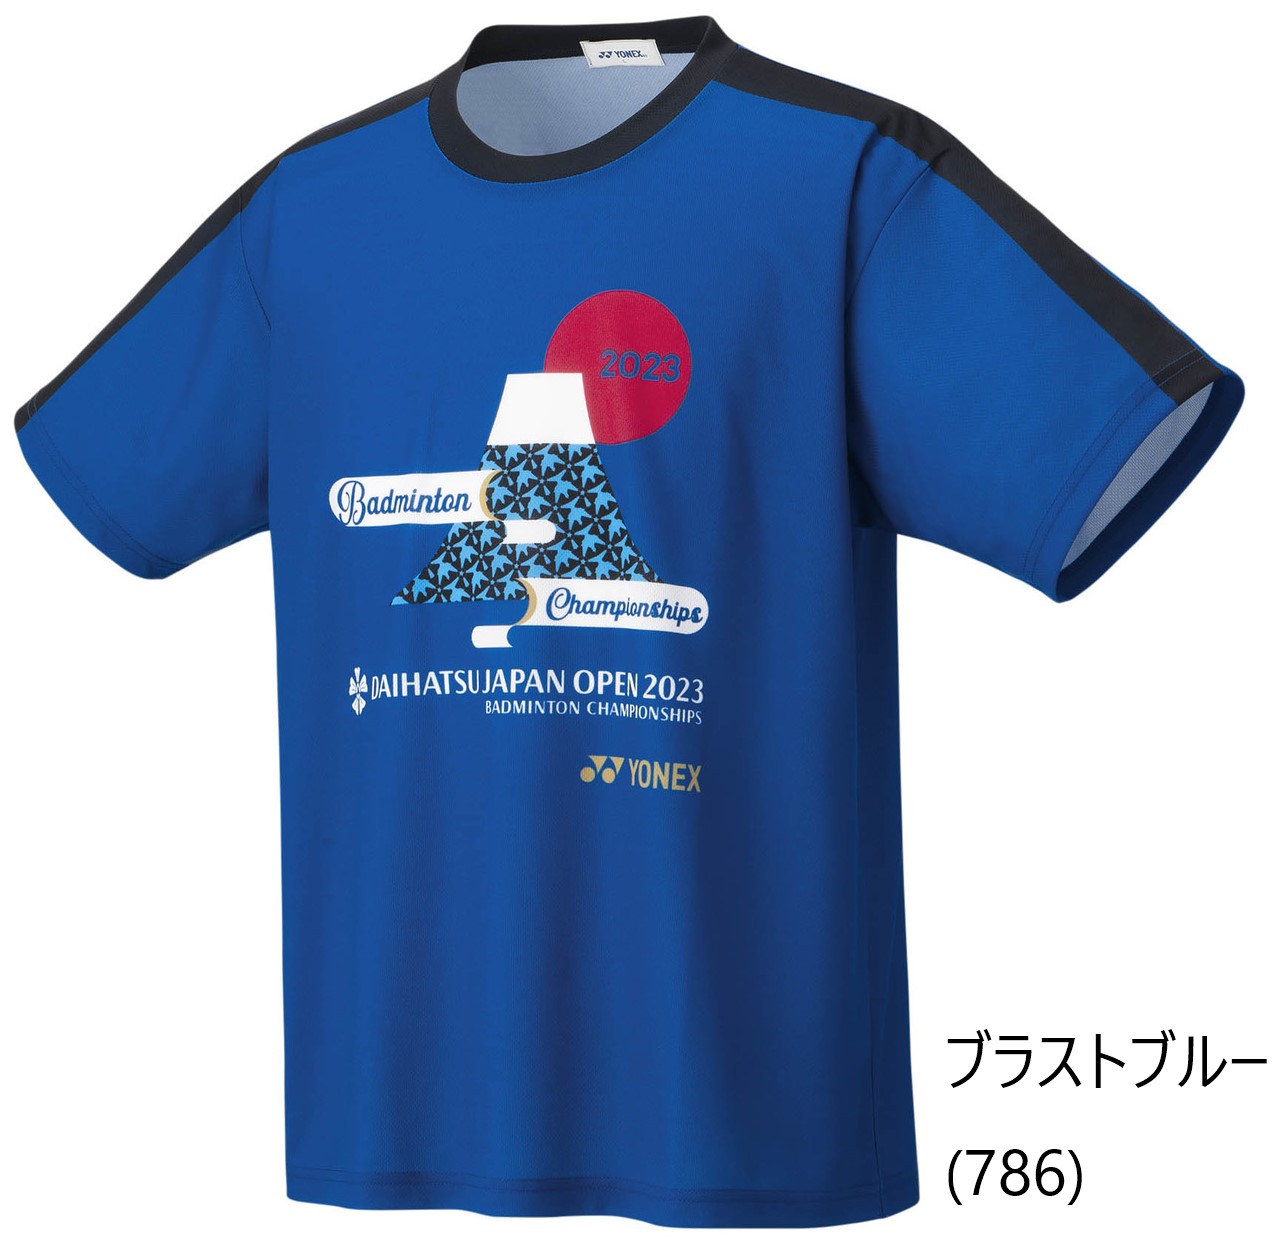 YONEXダイハツジャパンオープン記念ユニドライTシャツ